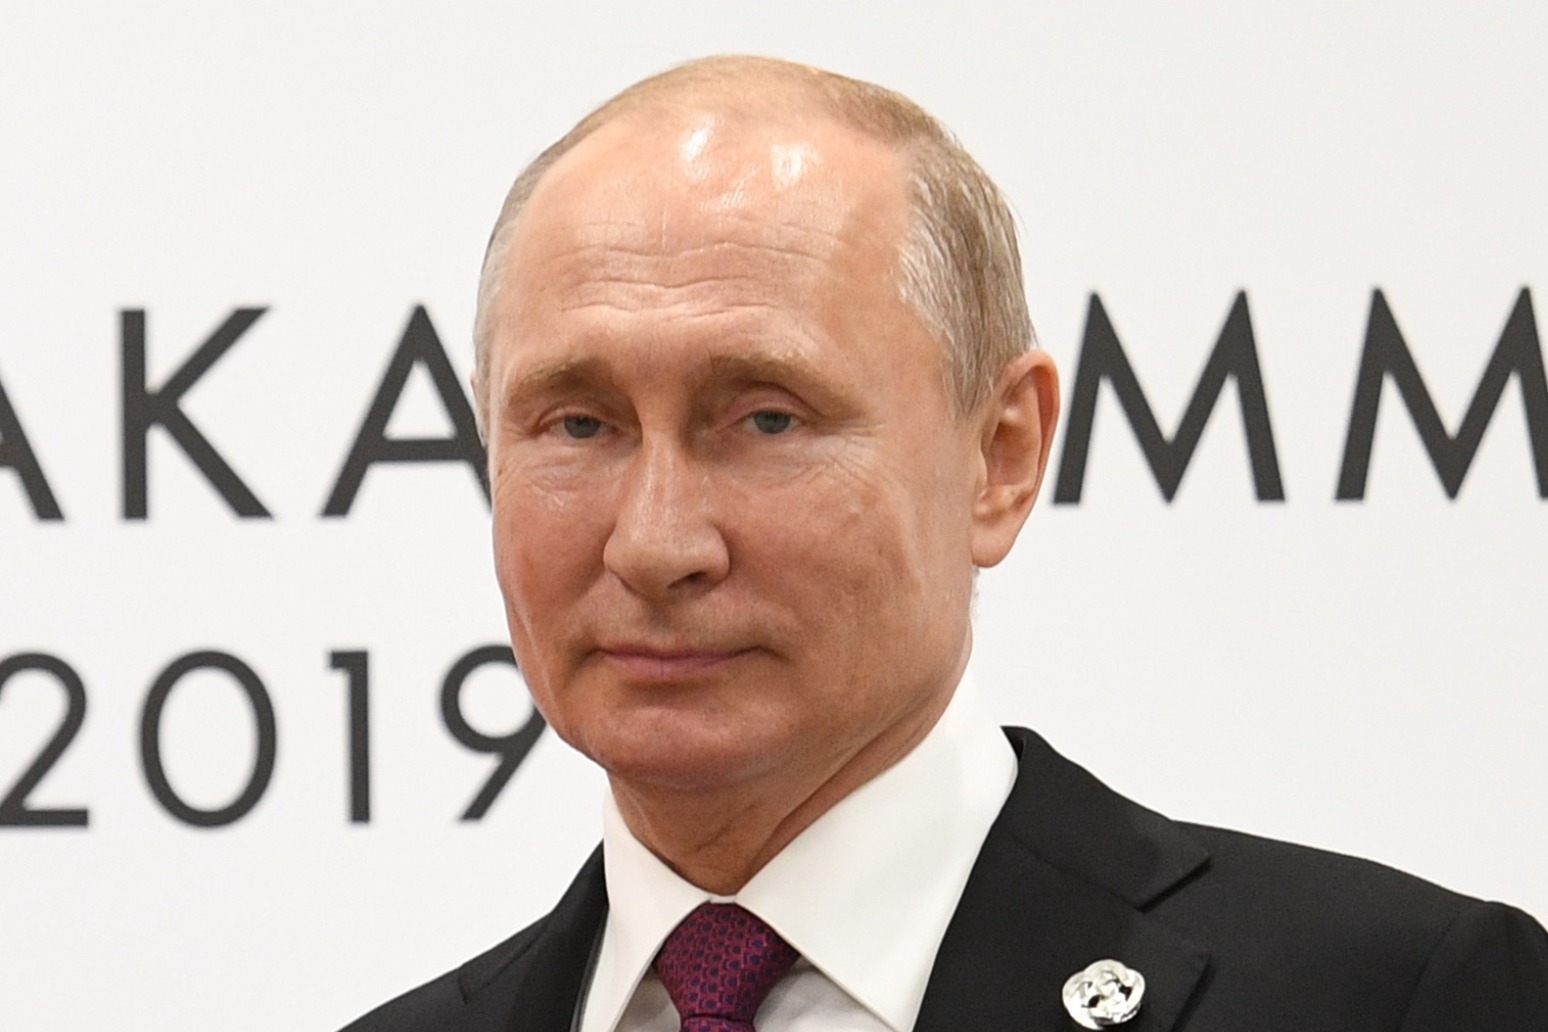 World waits to hear if Vladimir Putin references Ukraine in Victory Day speech 